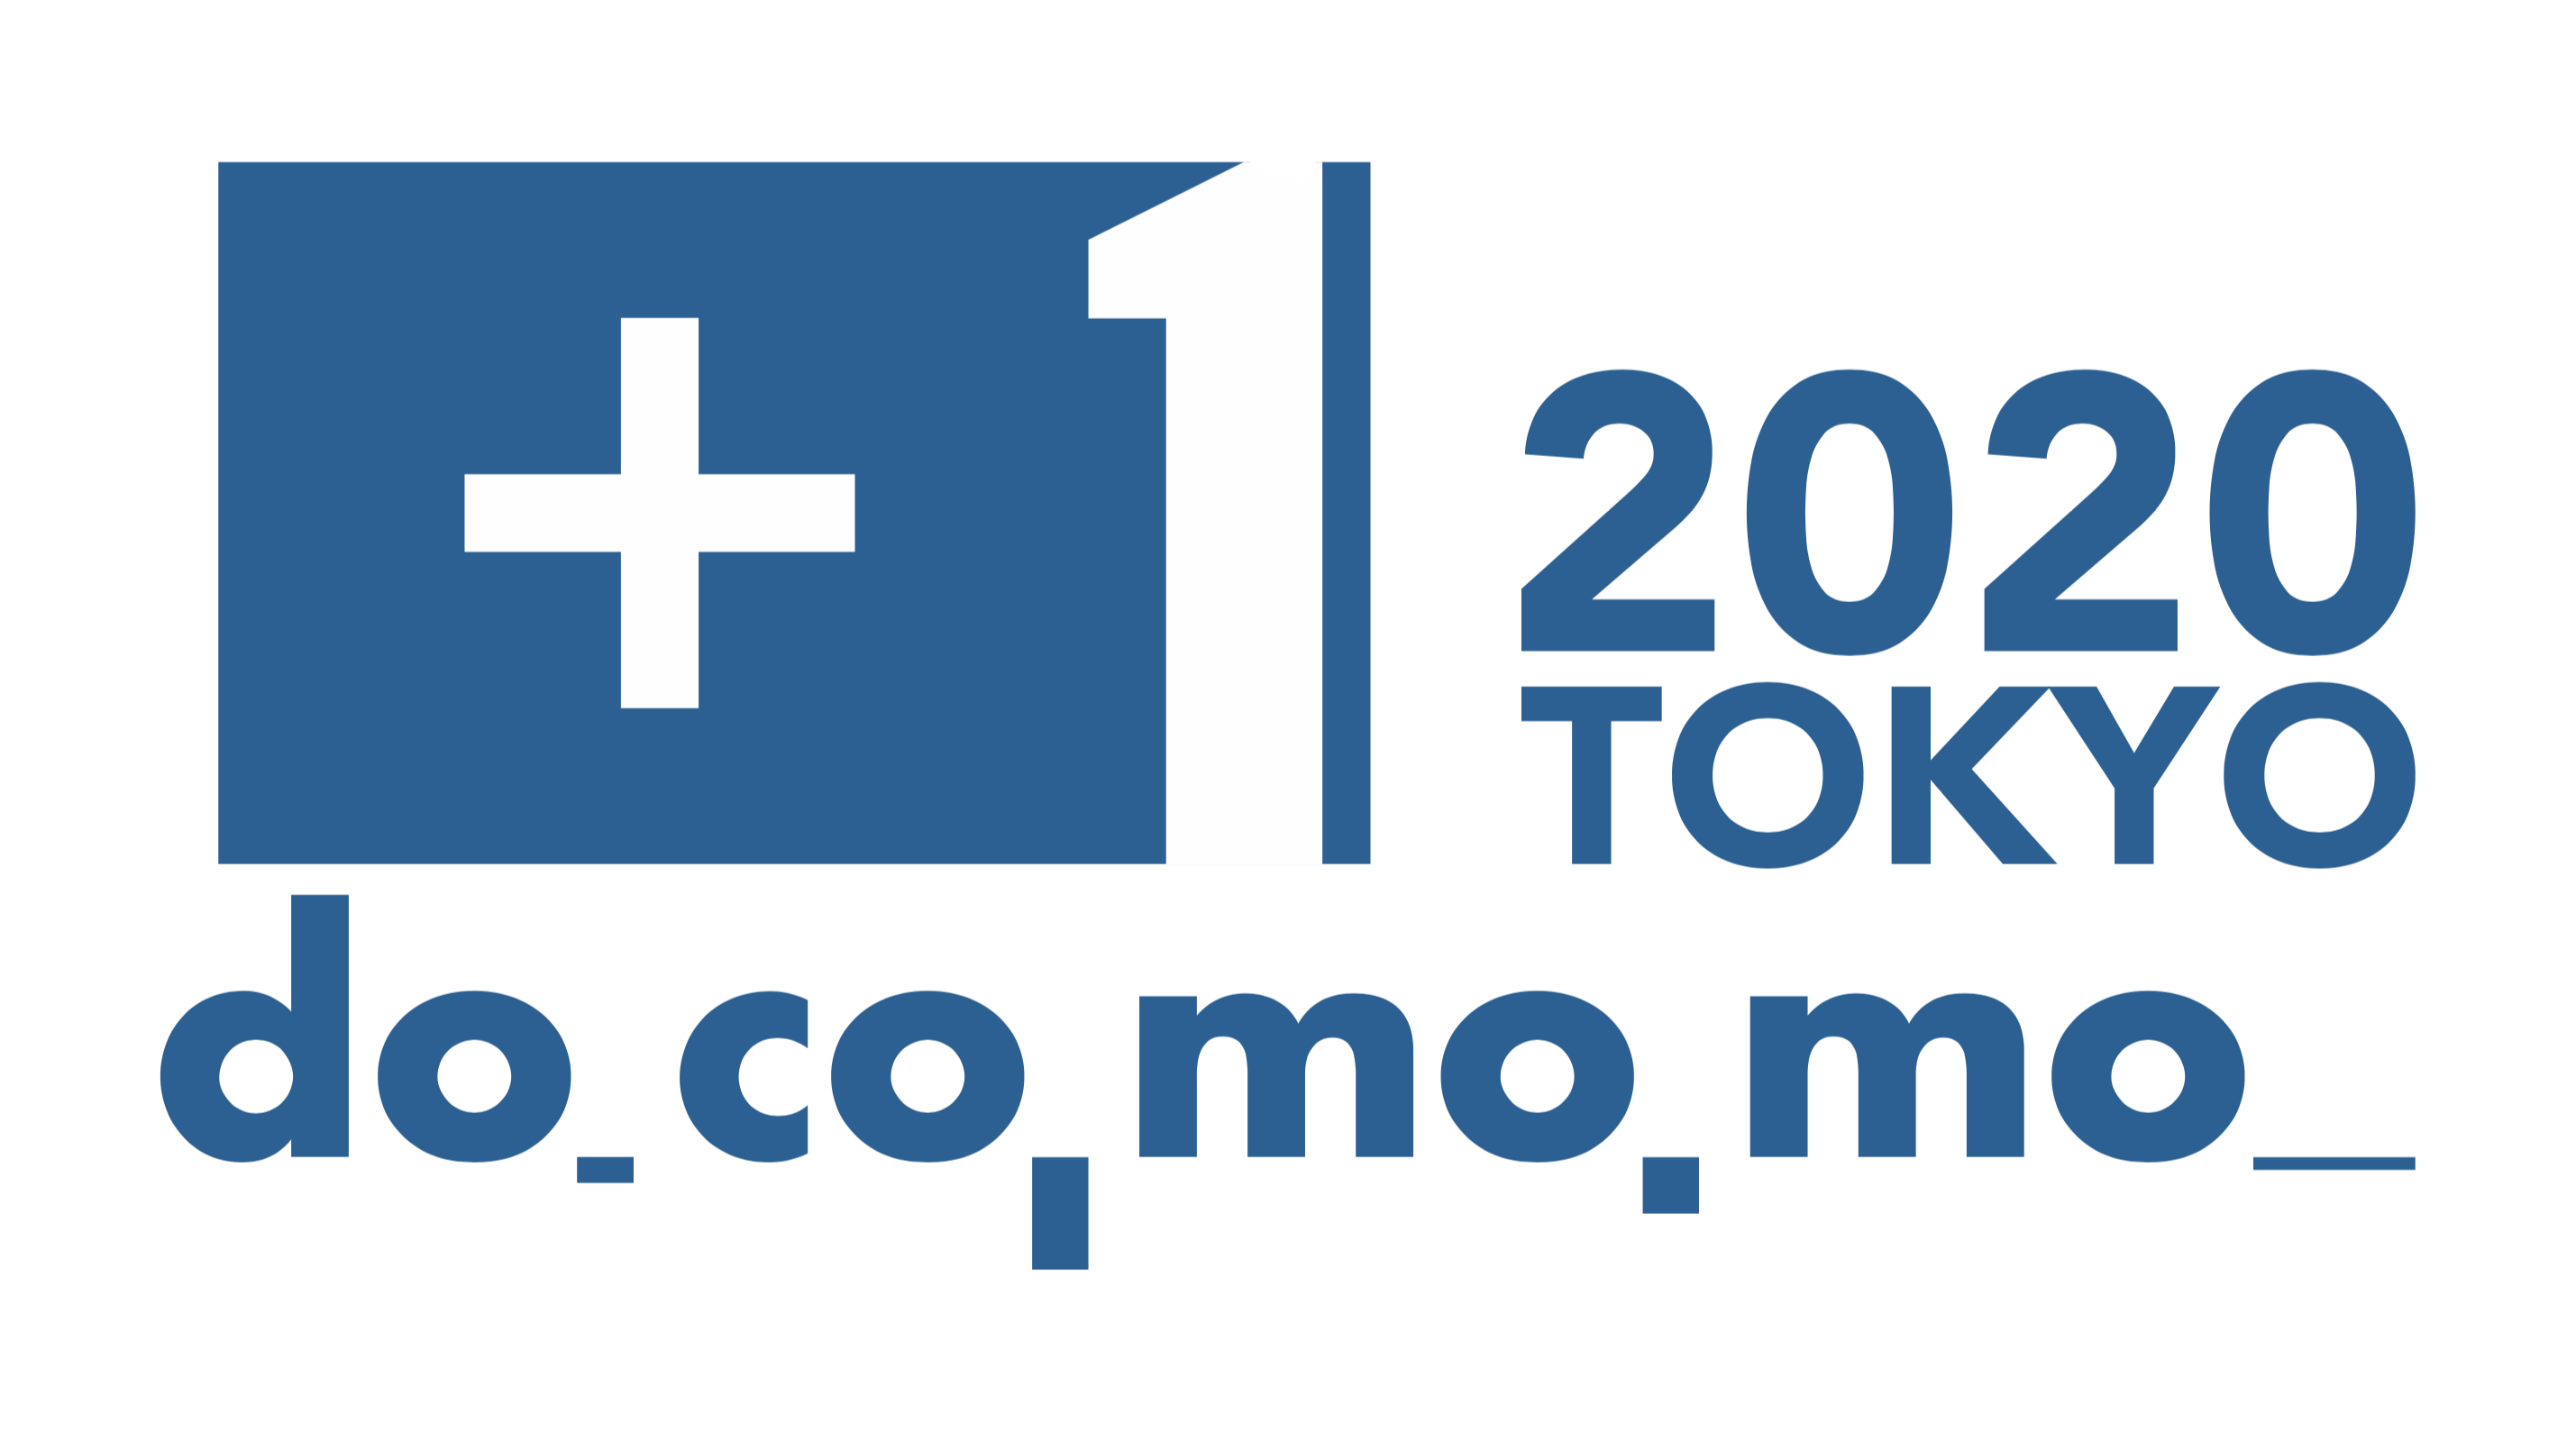 docomomo 2020+1 logo